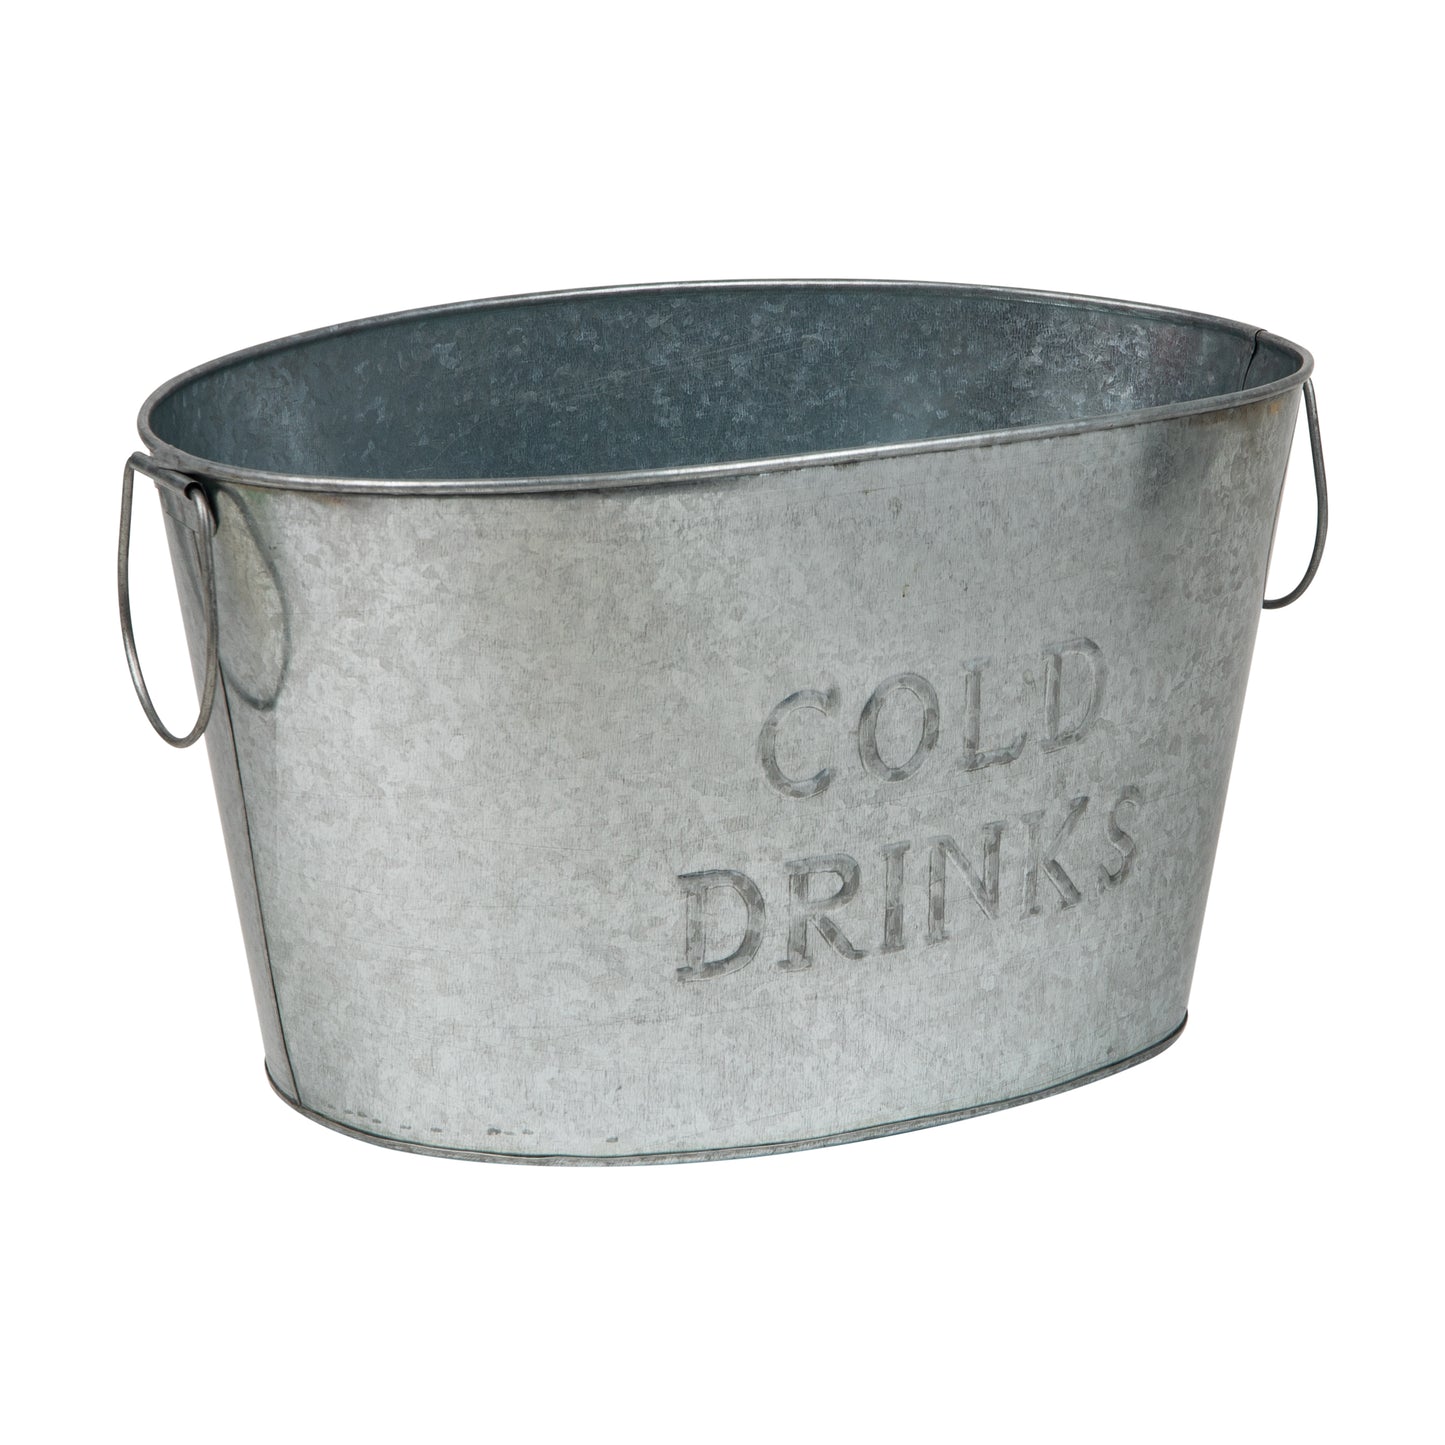 Mind Reader Ice Beverage Bucket for Parties, Wine Bucket, Baby Photo Tub, Galvanized Metal, 17.25"L x 11"W x 9.5"H, Silver